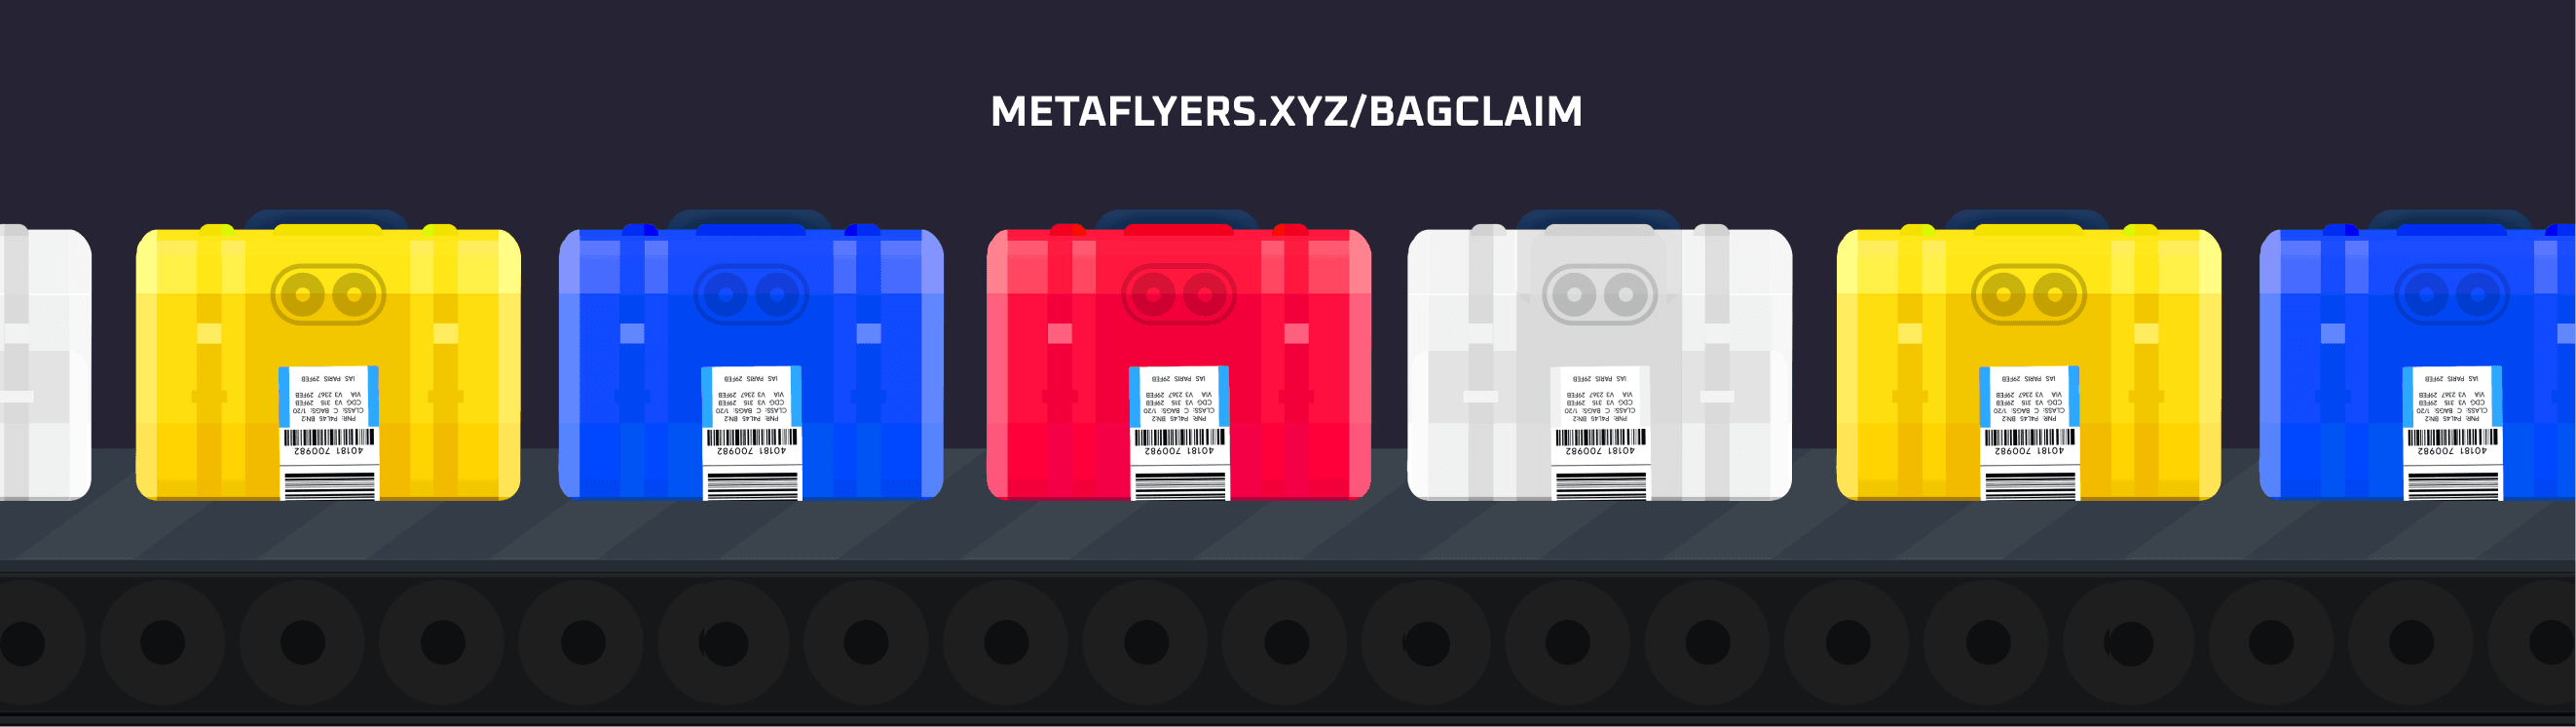 MetaFlyers: Baggage Claim